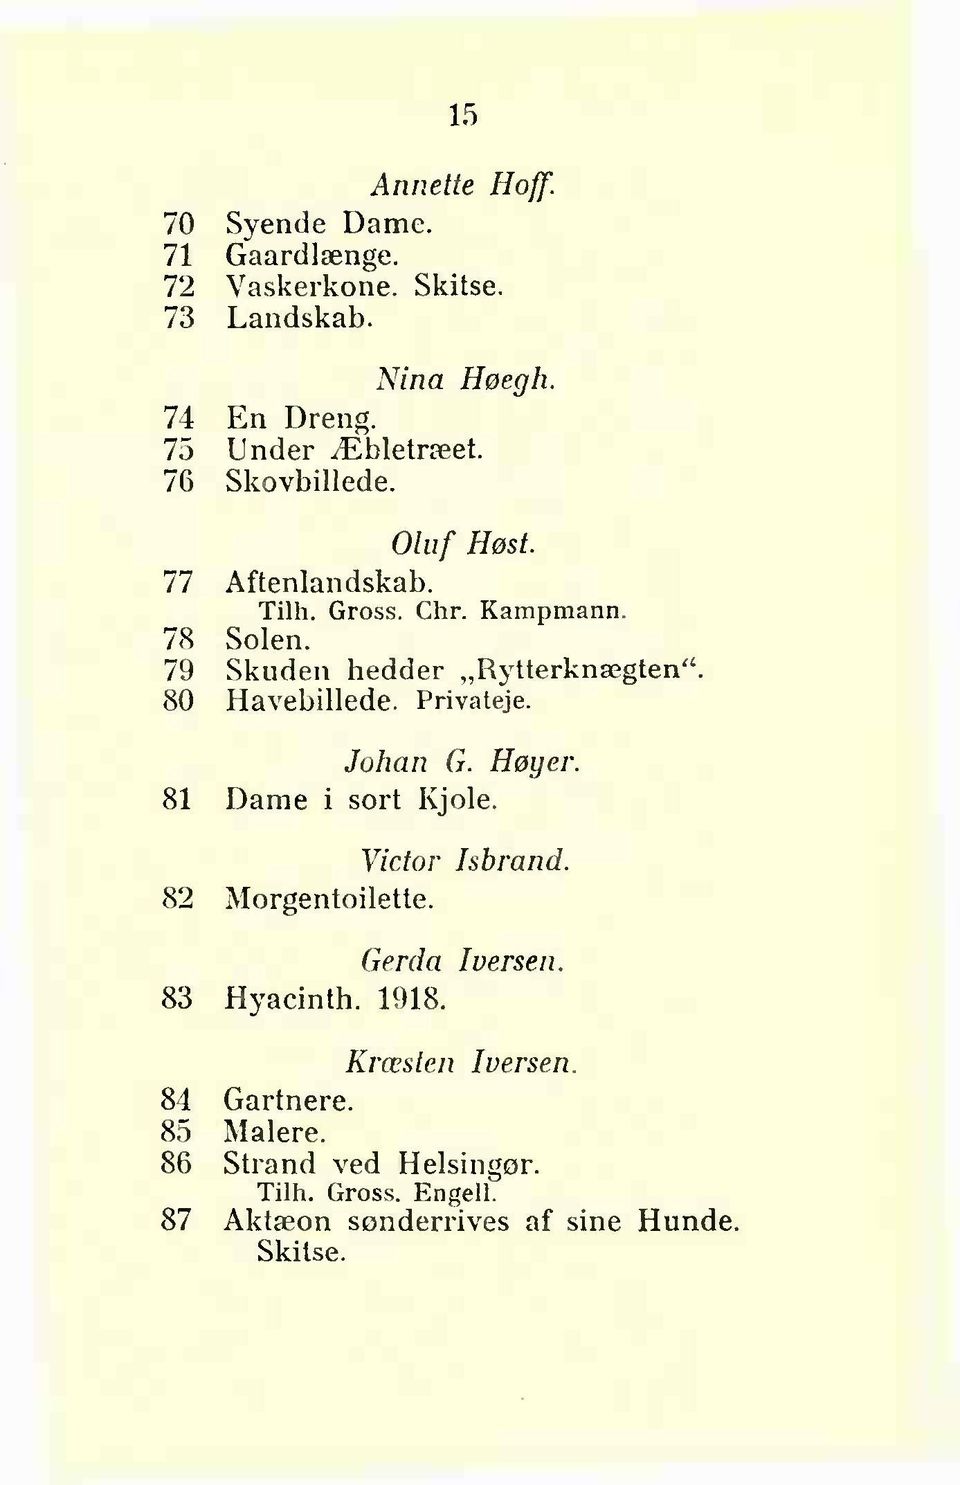 79 Skuden hedder Rytterknægten". 80 Havebillede. Privateje. Johan G. Høyer. 81 Dame i sort Kjole. Victor Isbrand.